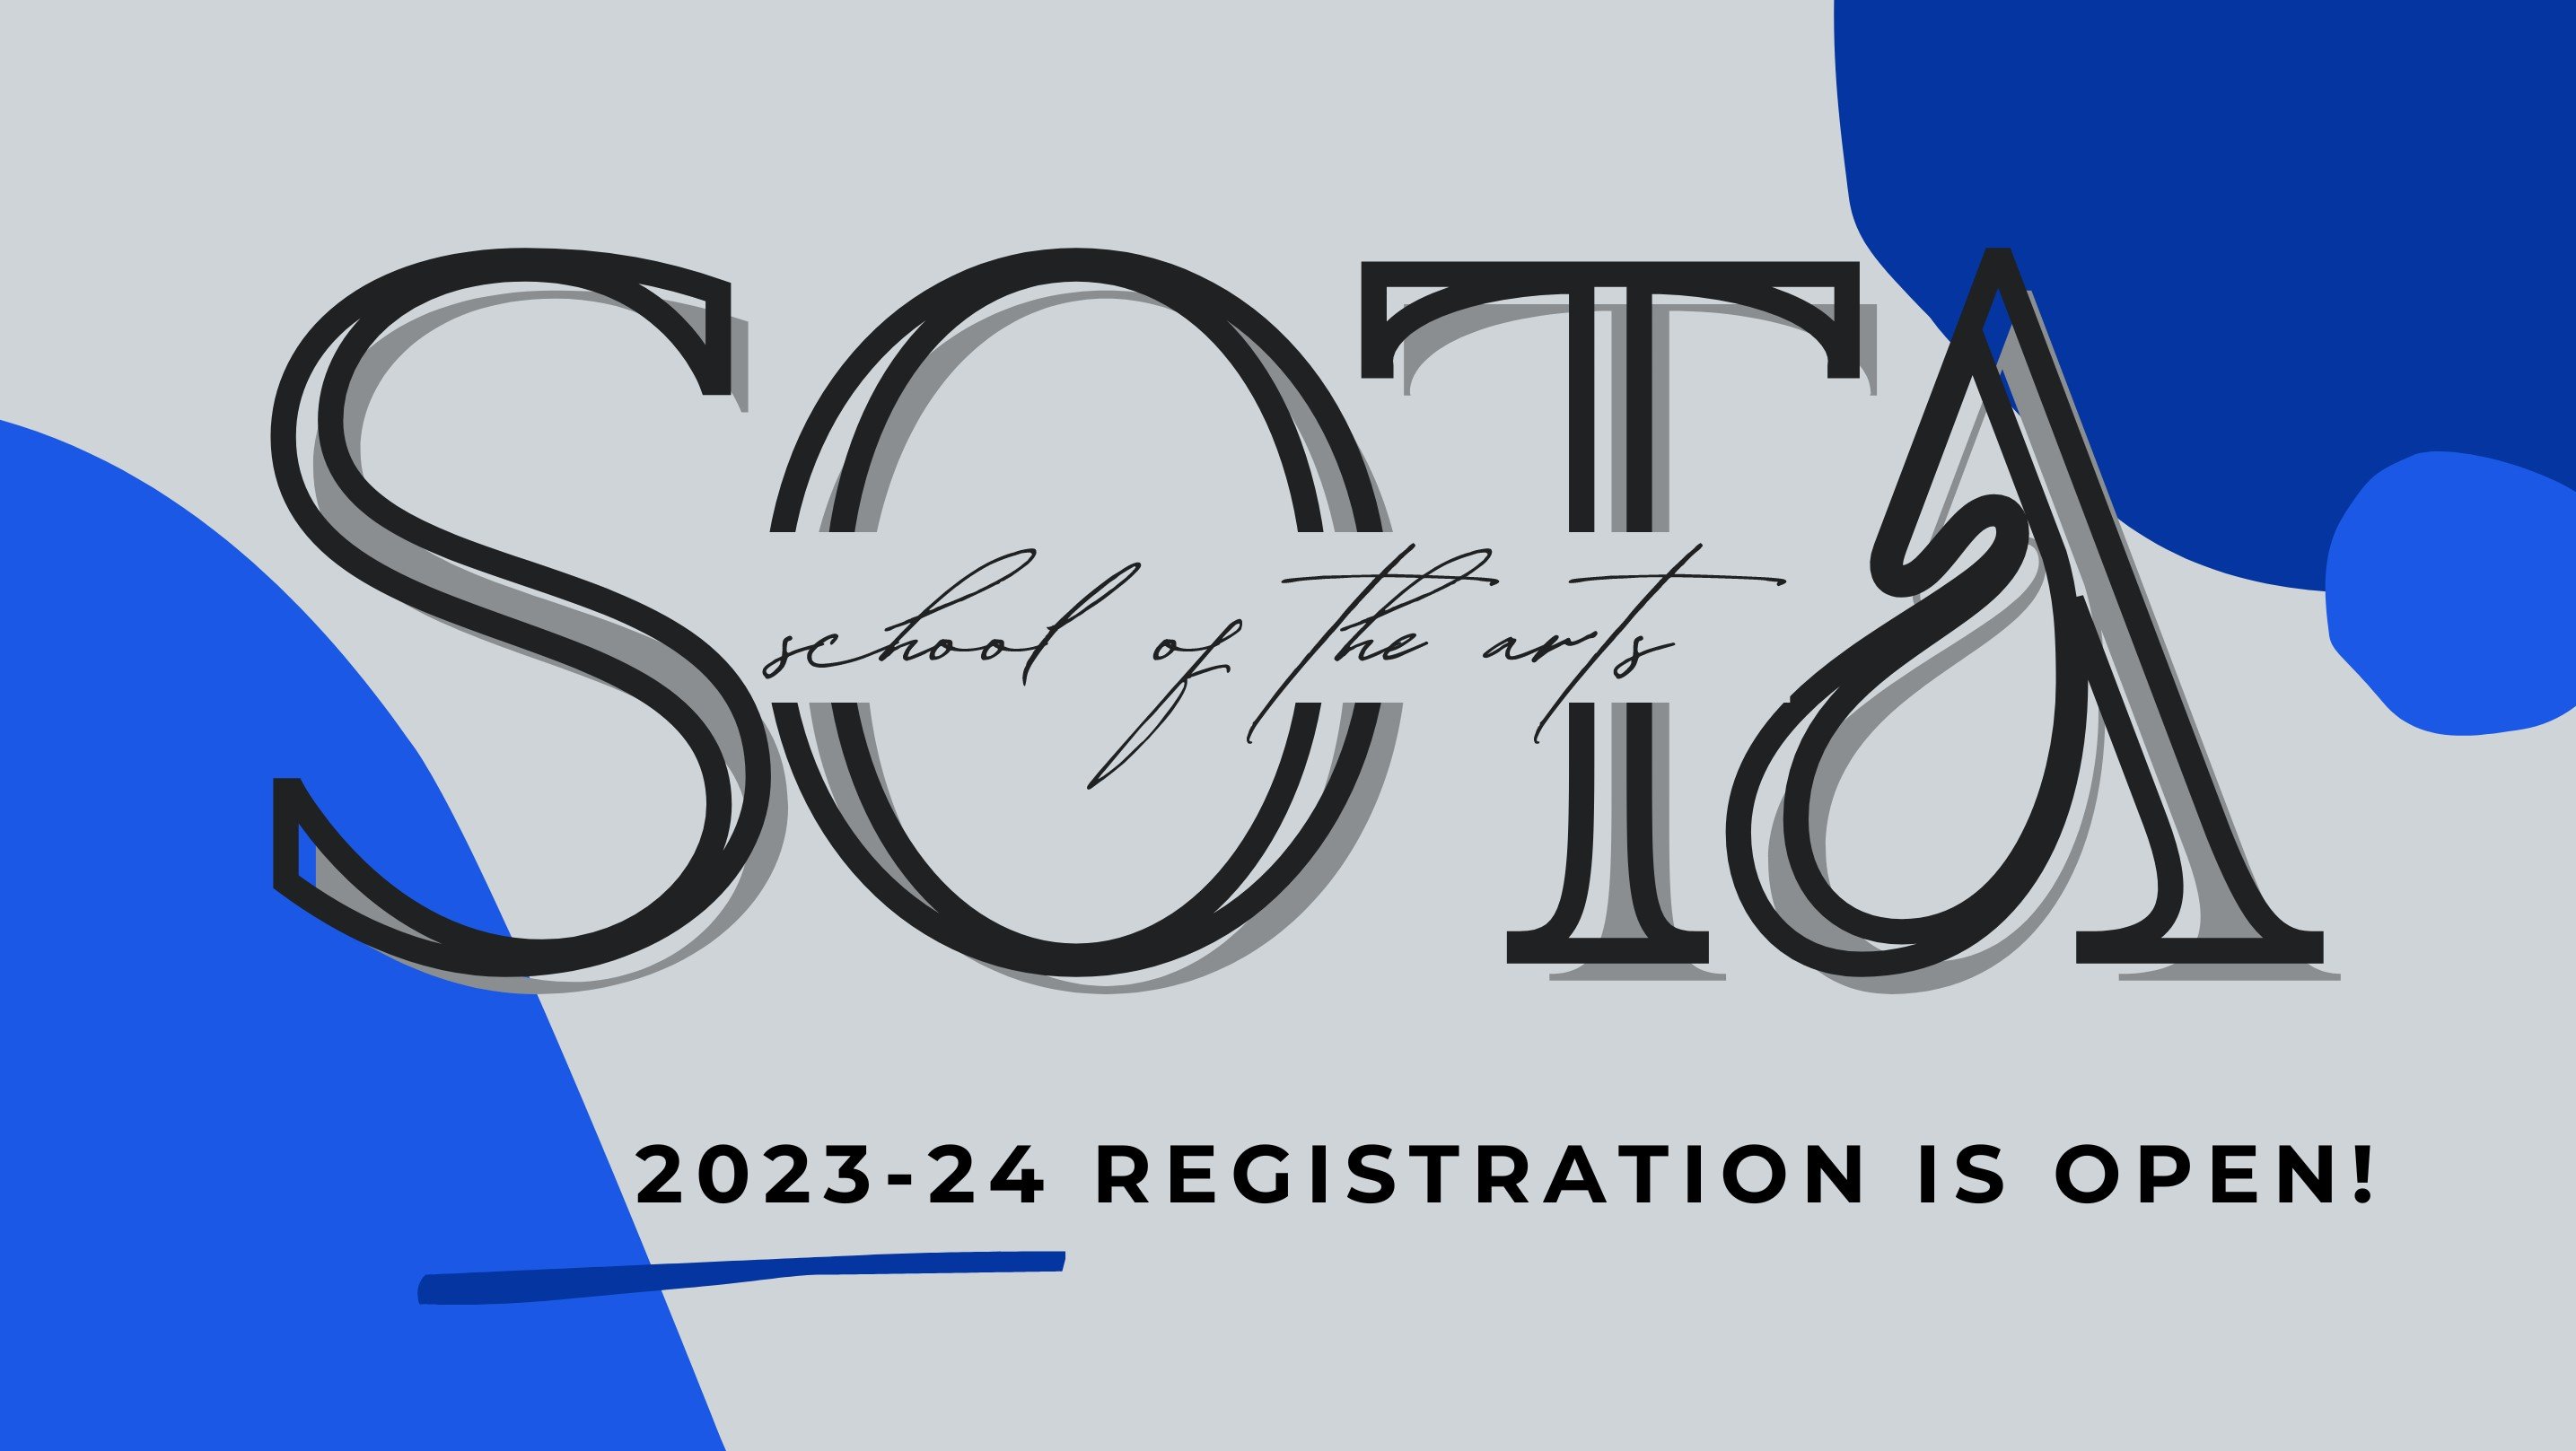 SOTA web banner